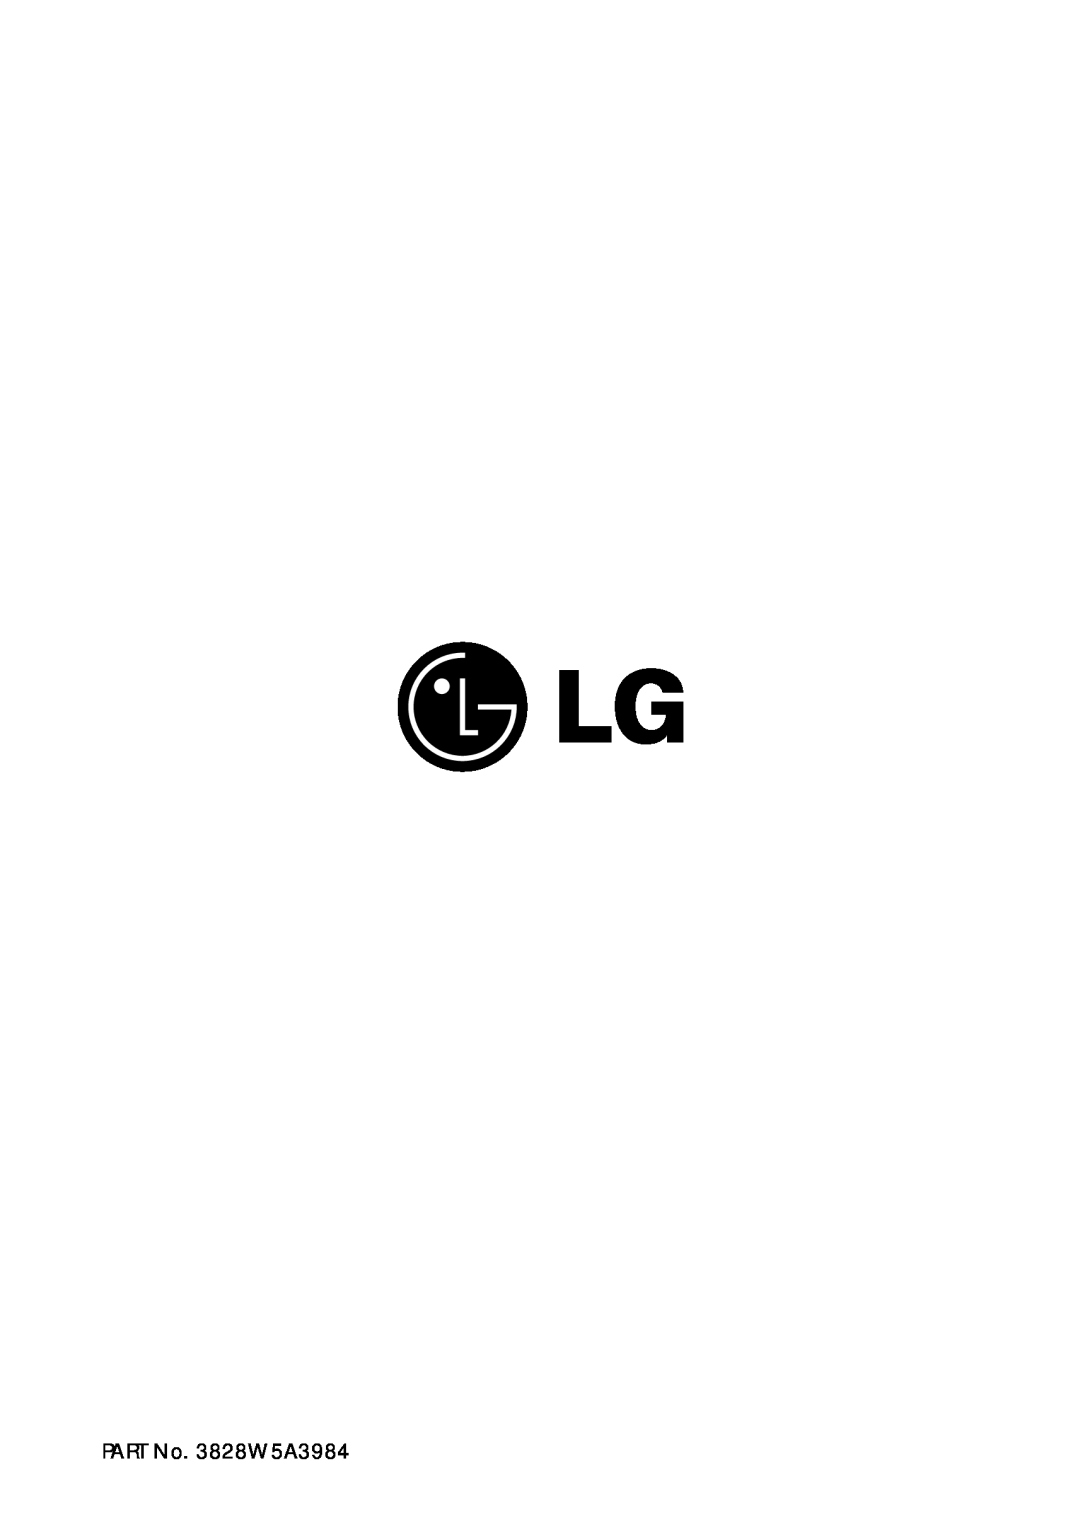 LG Electronics MS-192W instruction manual PART No. 3828W5A3984 